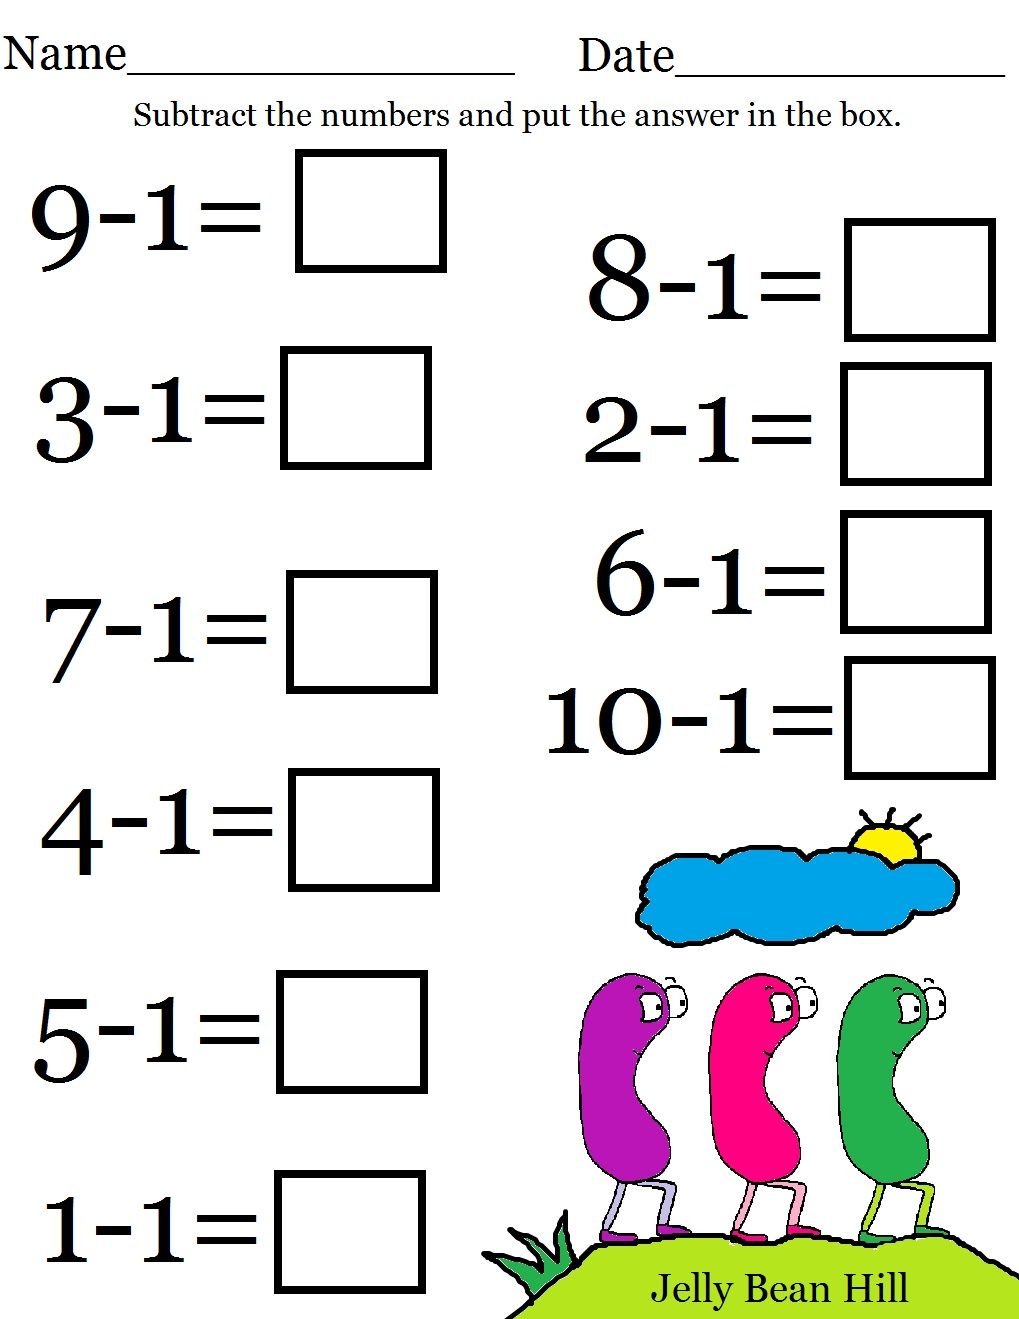 kindergarten-counting-objects-math-practice-kindergarten-math